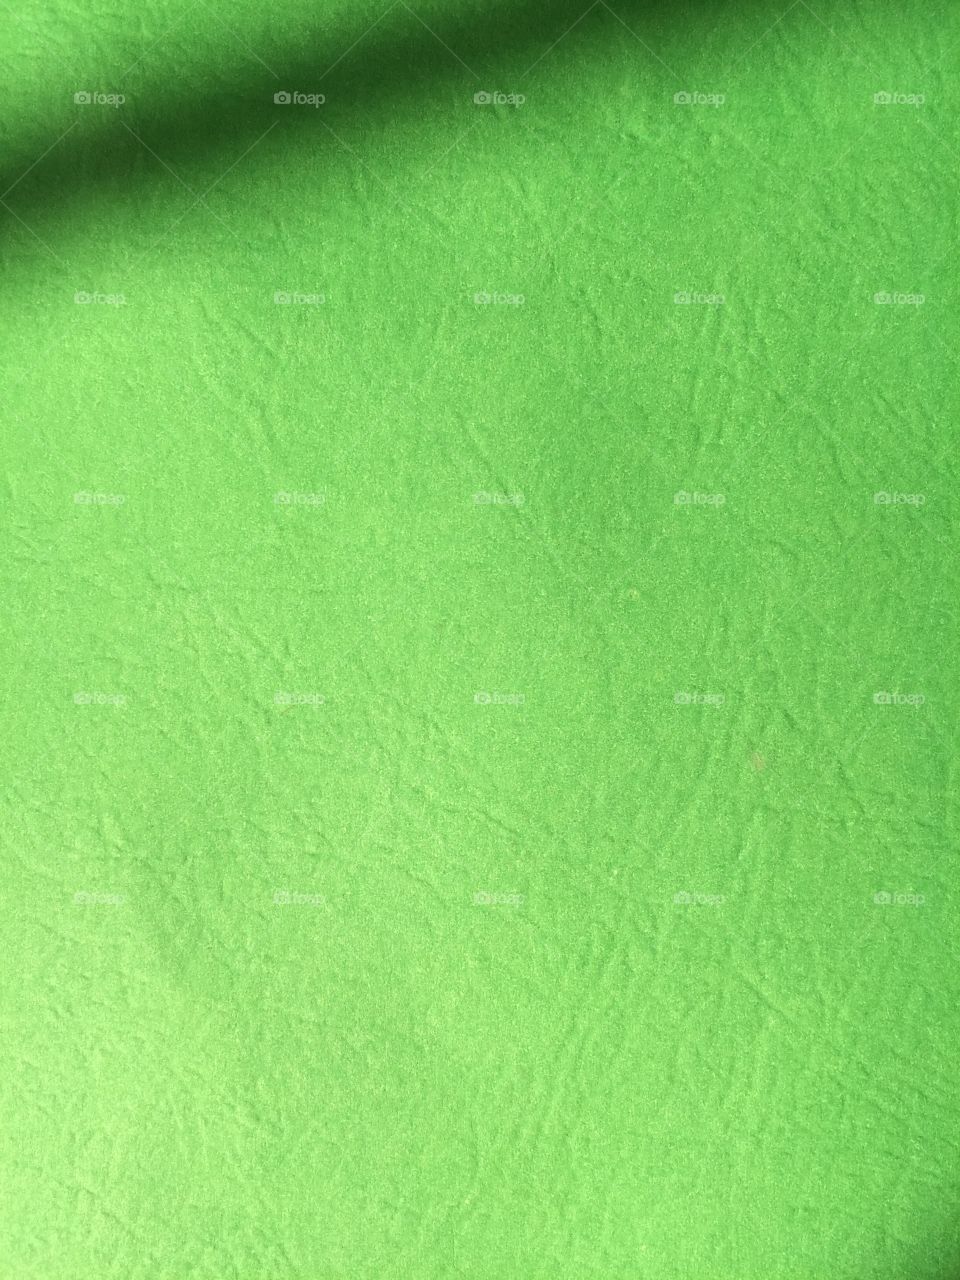 Bright vivid green textured paper 